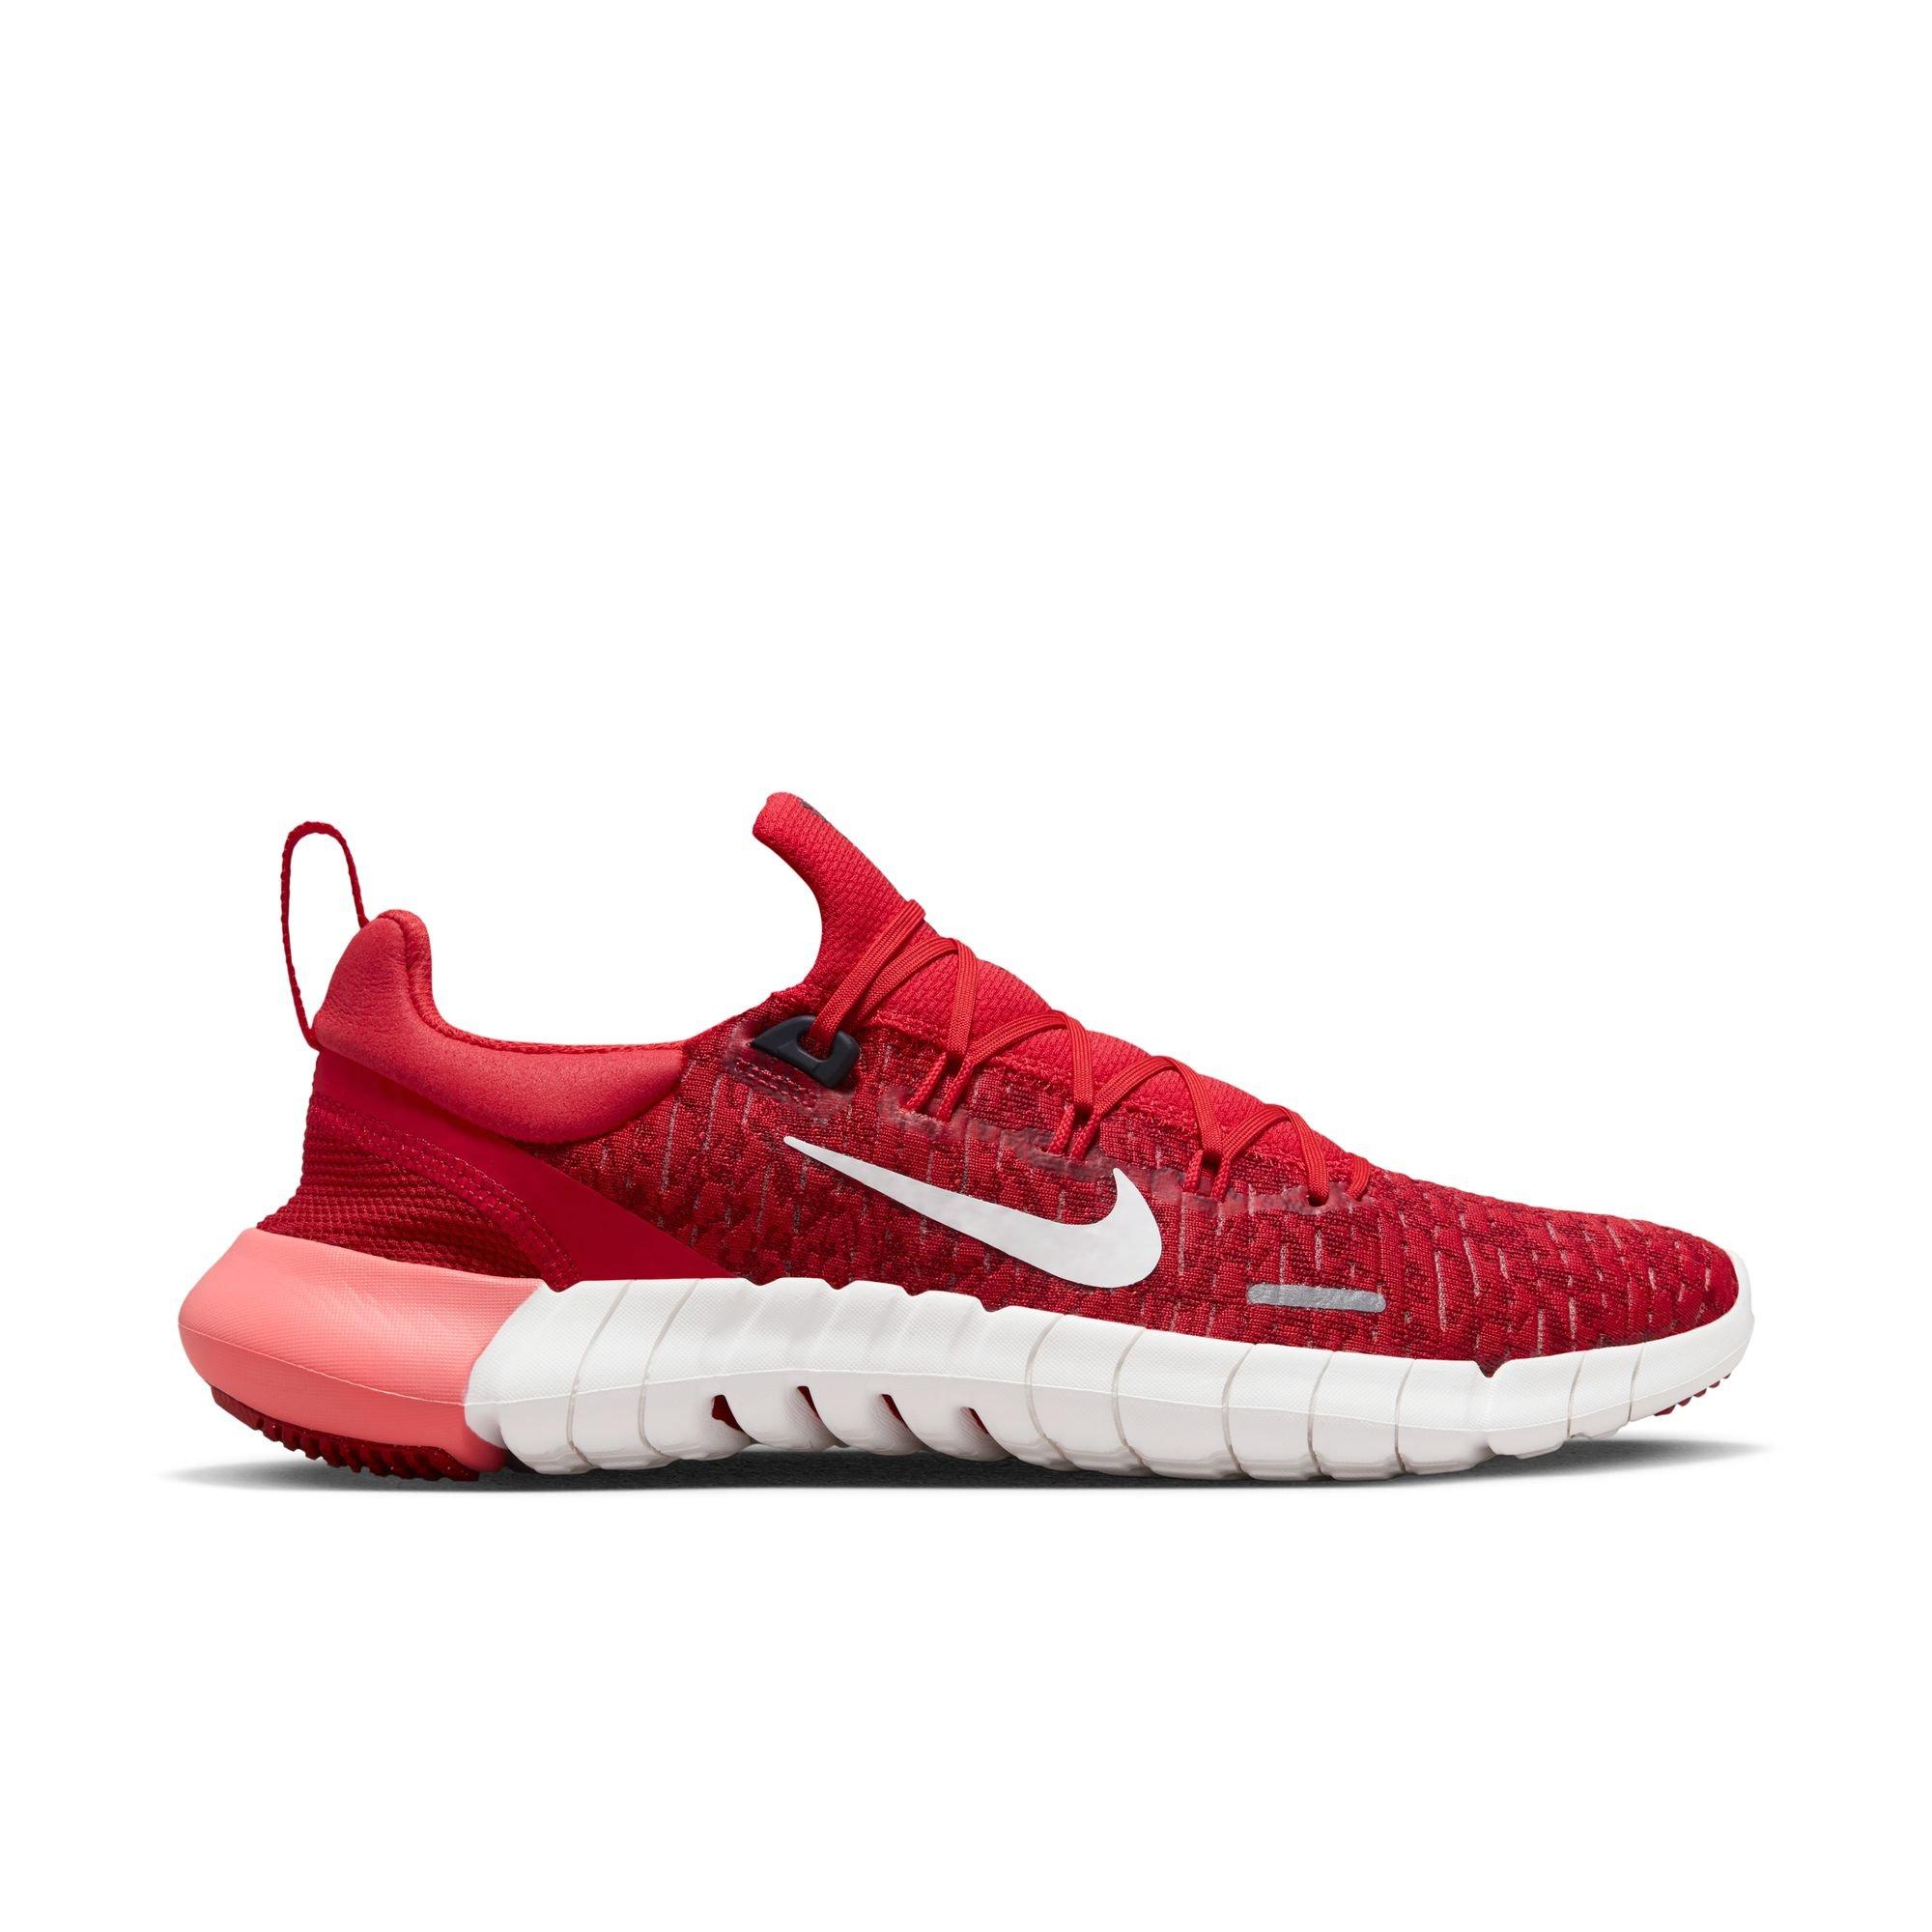 envase Ardilla sin cable Nike Free Run 5.0 "University Red/White/Gym Red" Women's Road Running Shoe